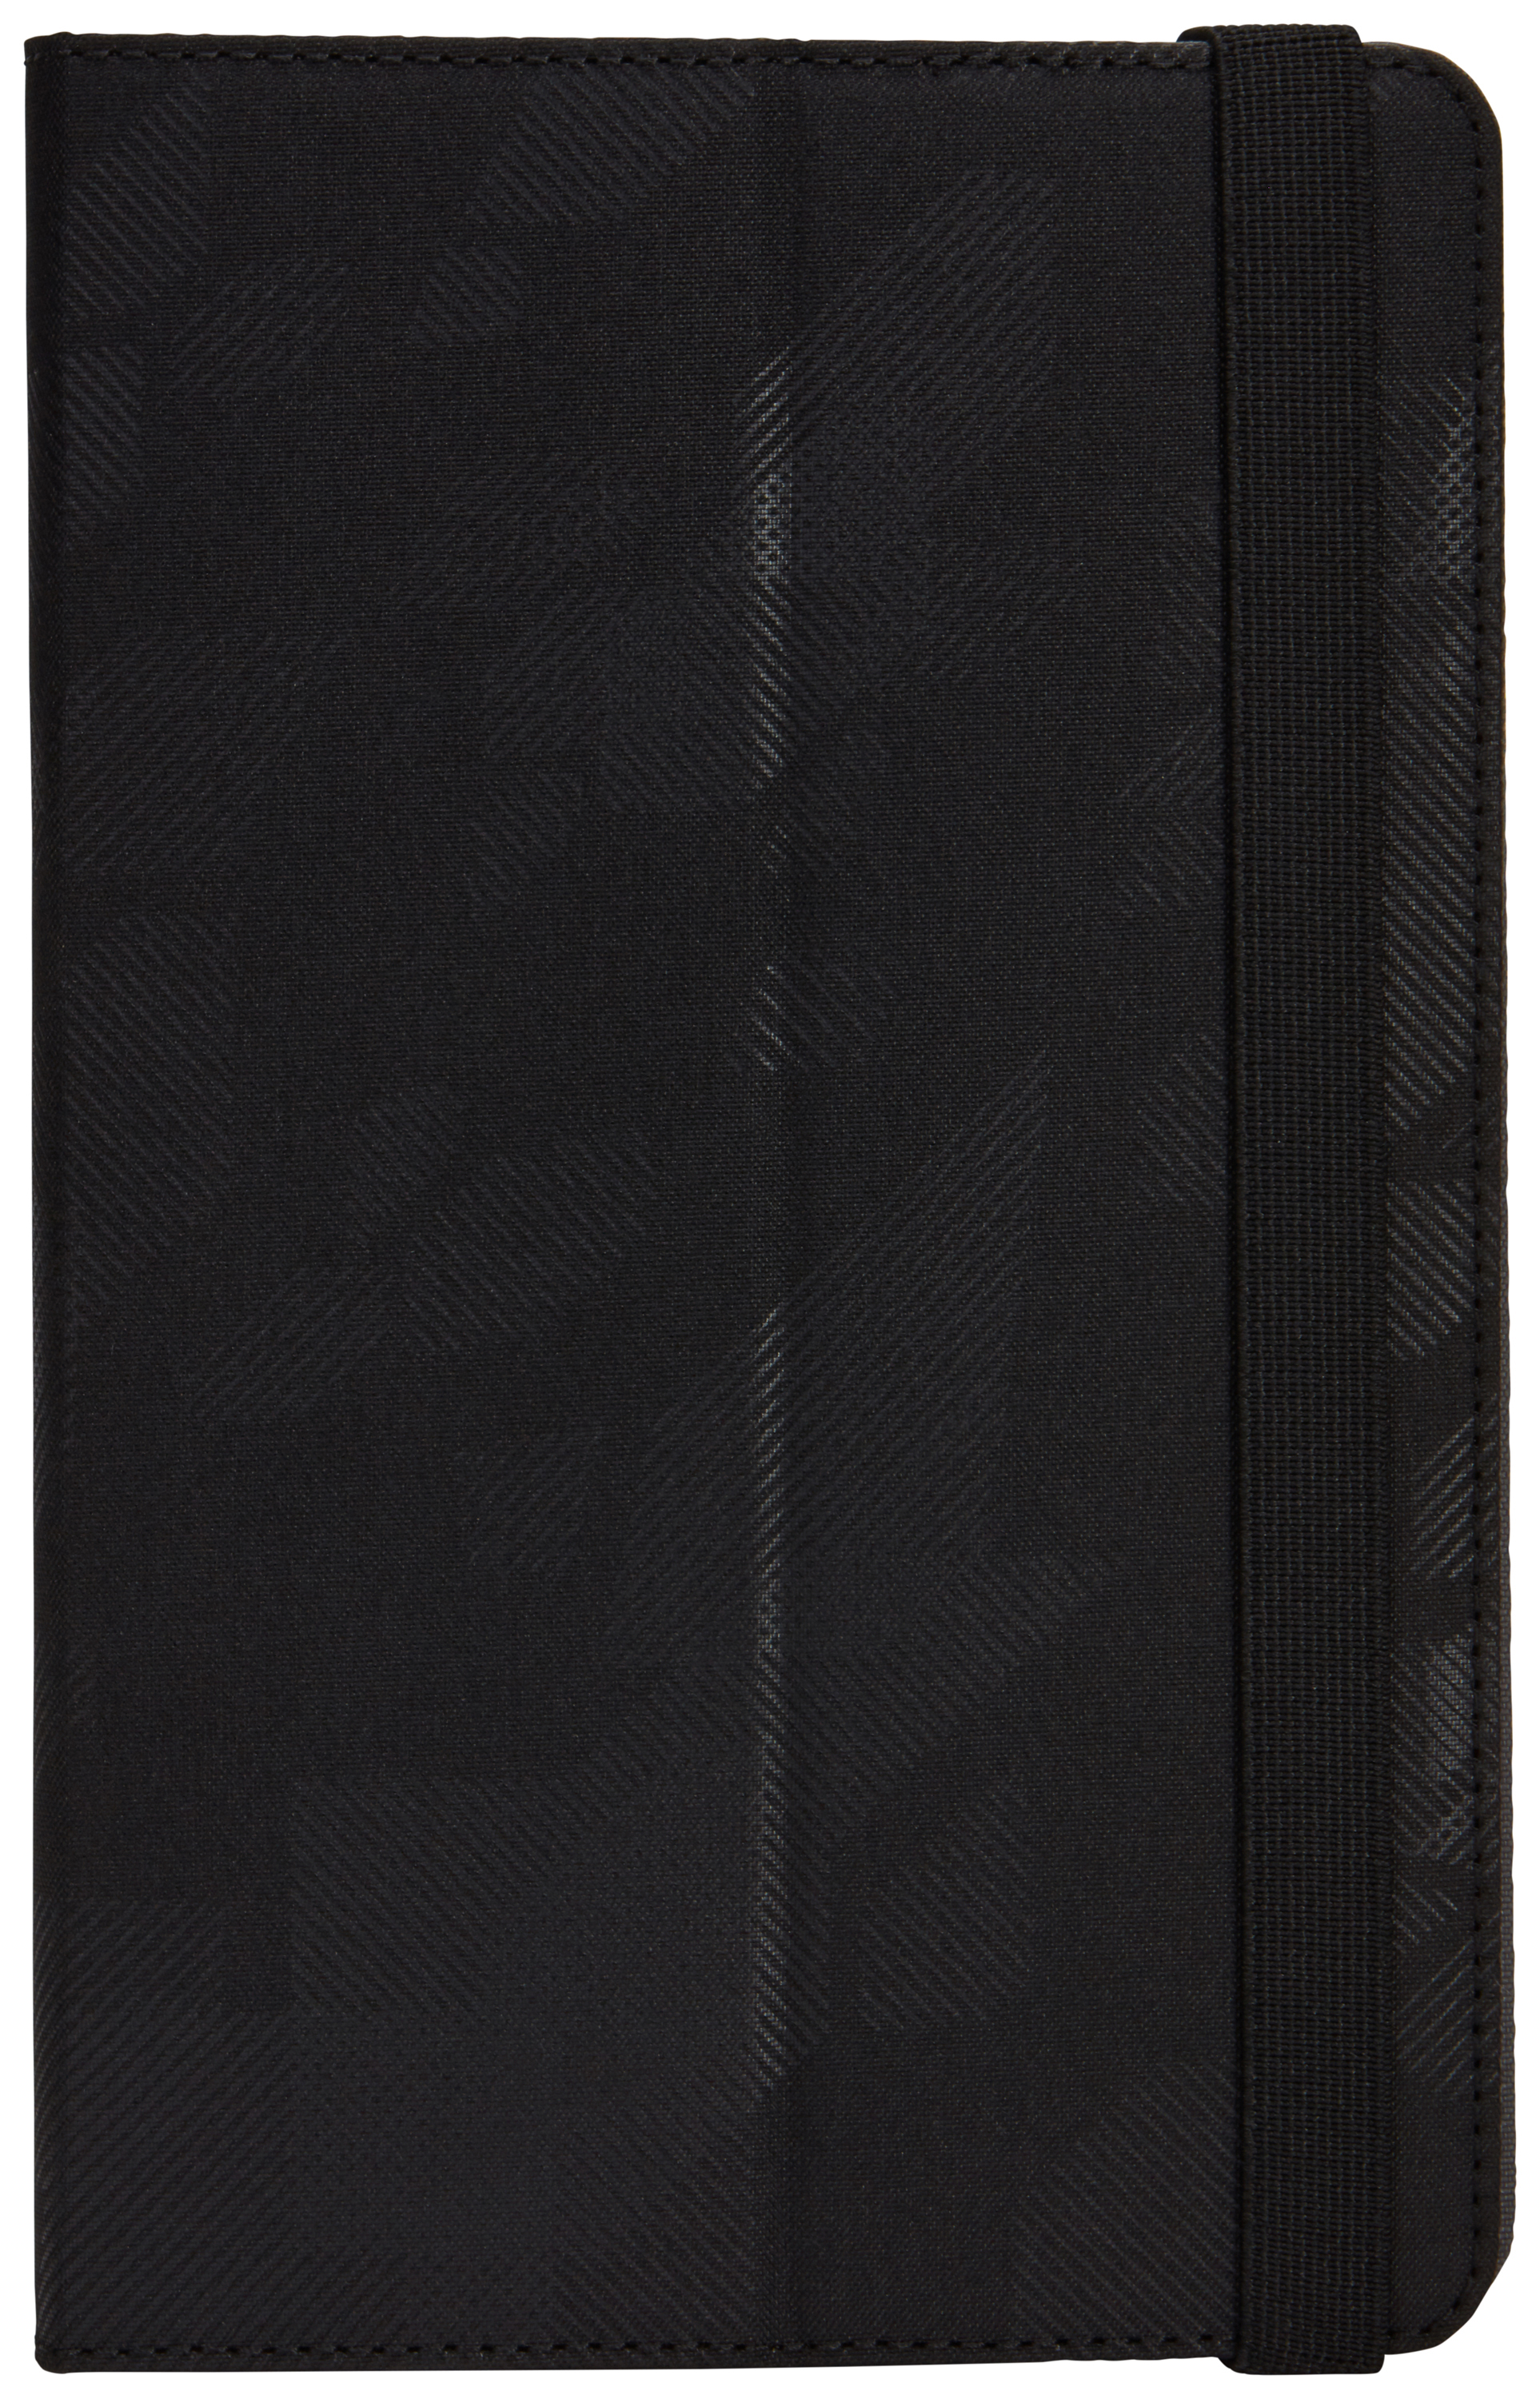 CASE-LOGIC Surefit Universal, Flip Cover, Universal, Schwarz Folio